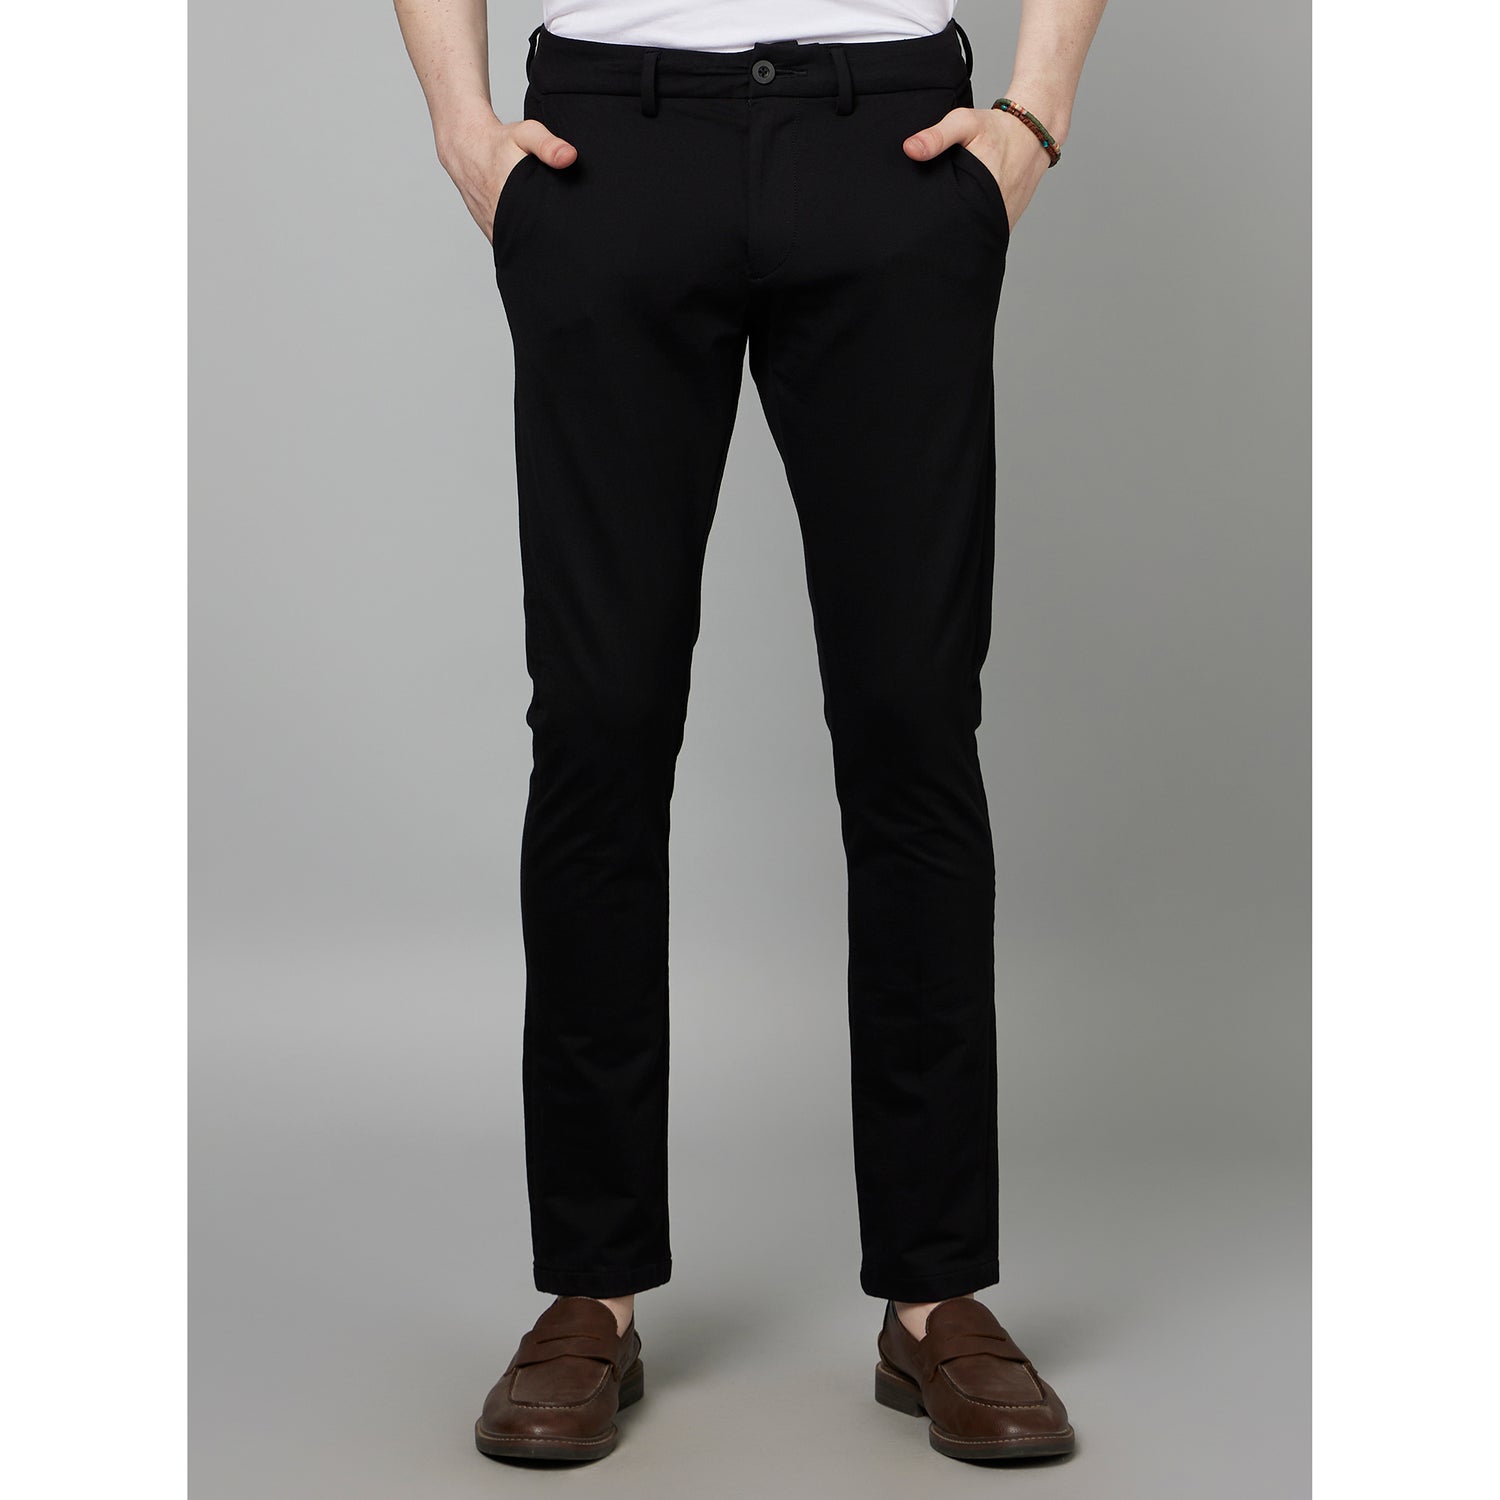 Black Mid-Rise Classic Slim Fit Plain Cotton Formal Trousers (FOKNIT)